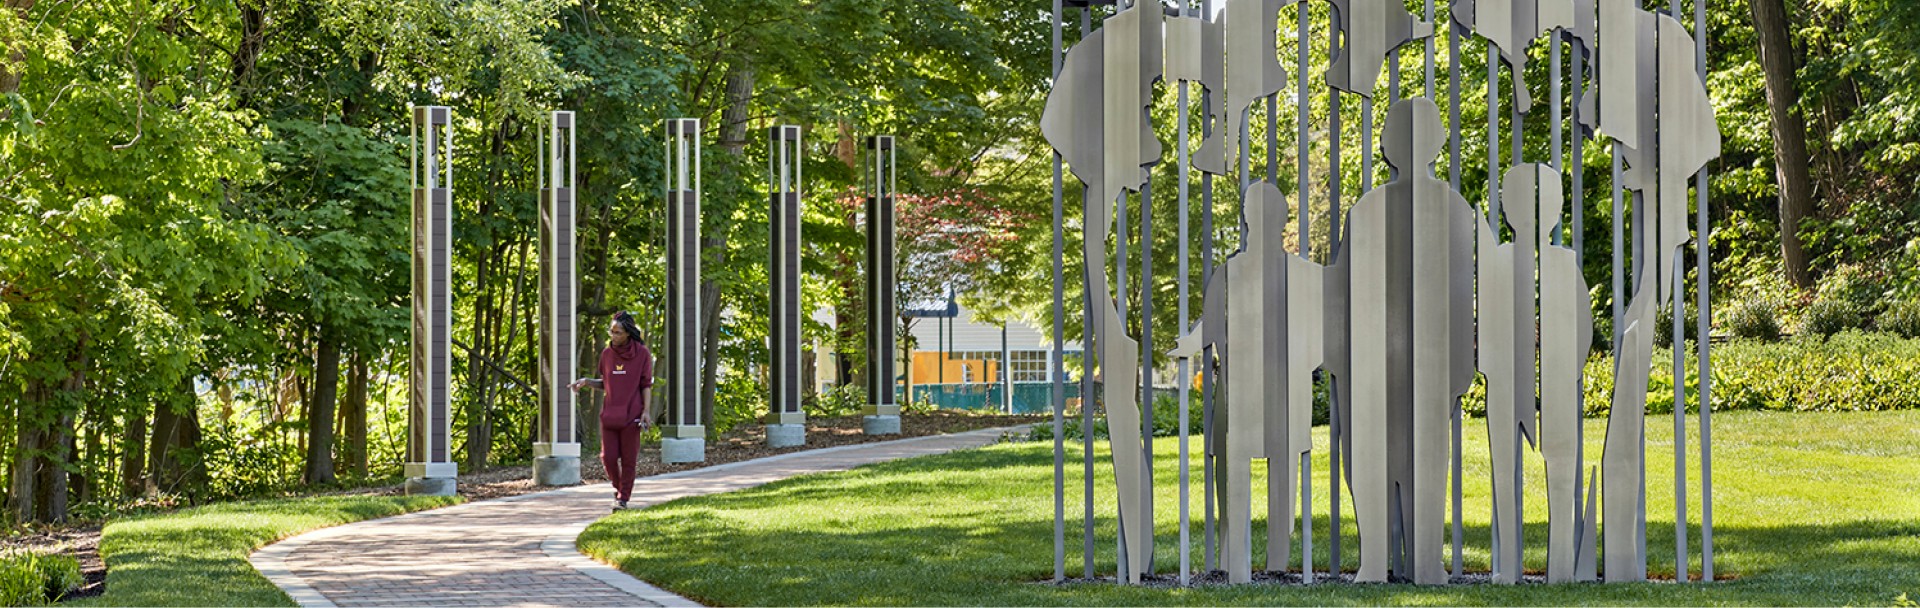 Svigals + Partners Designs Gun Violence Memorial Gardens in New Haven